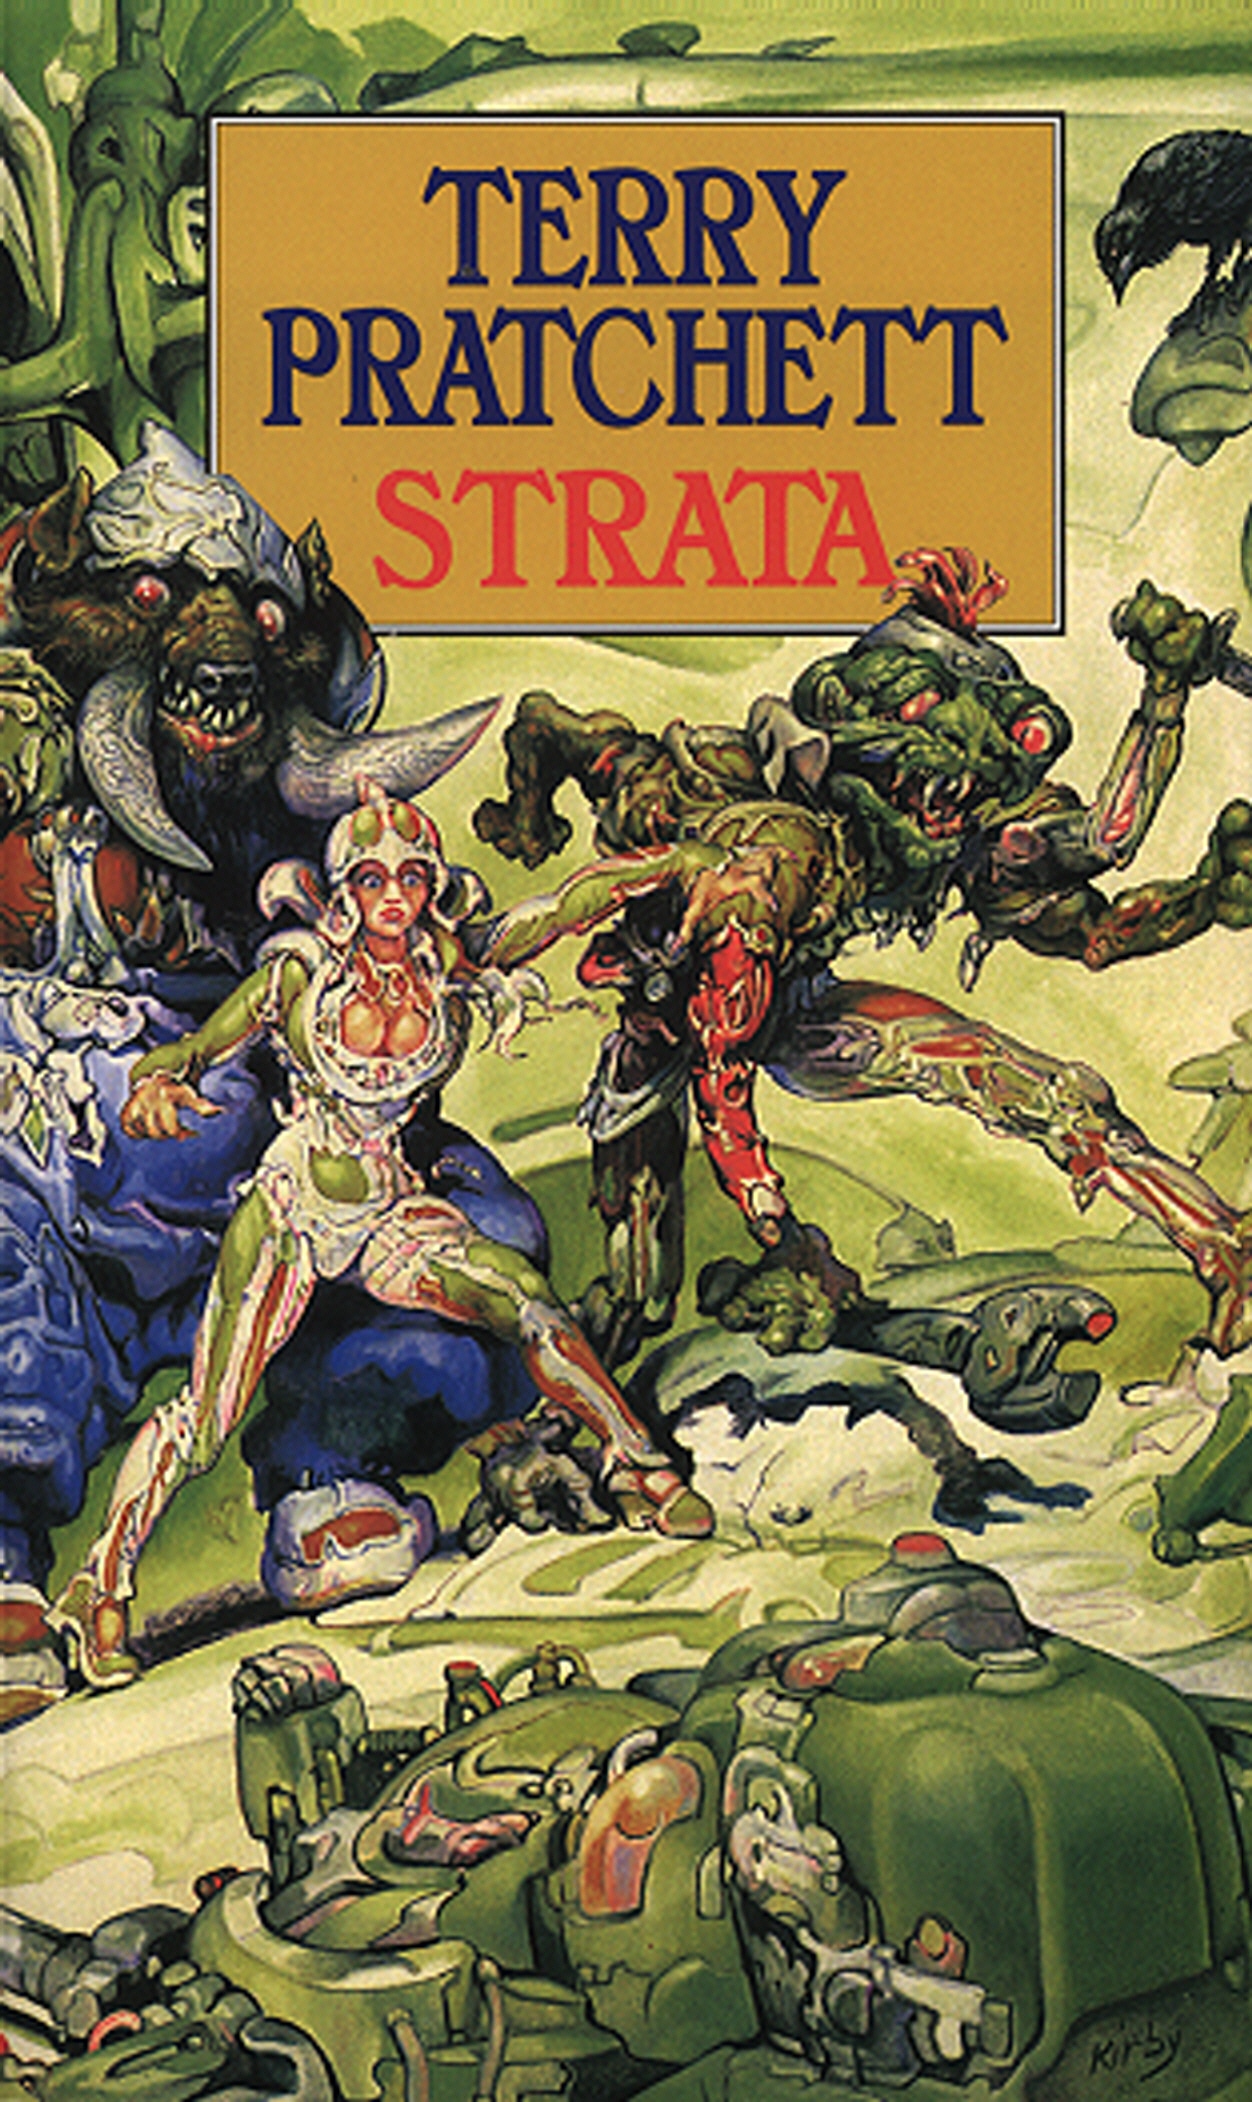 Book “Strata” by Terry Pratchett — April 22, 1988